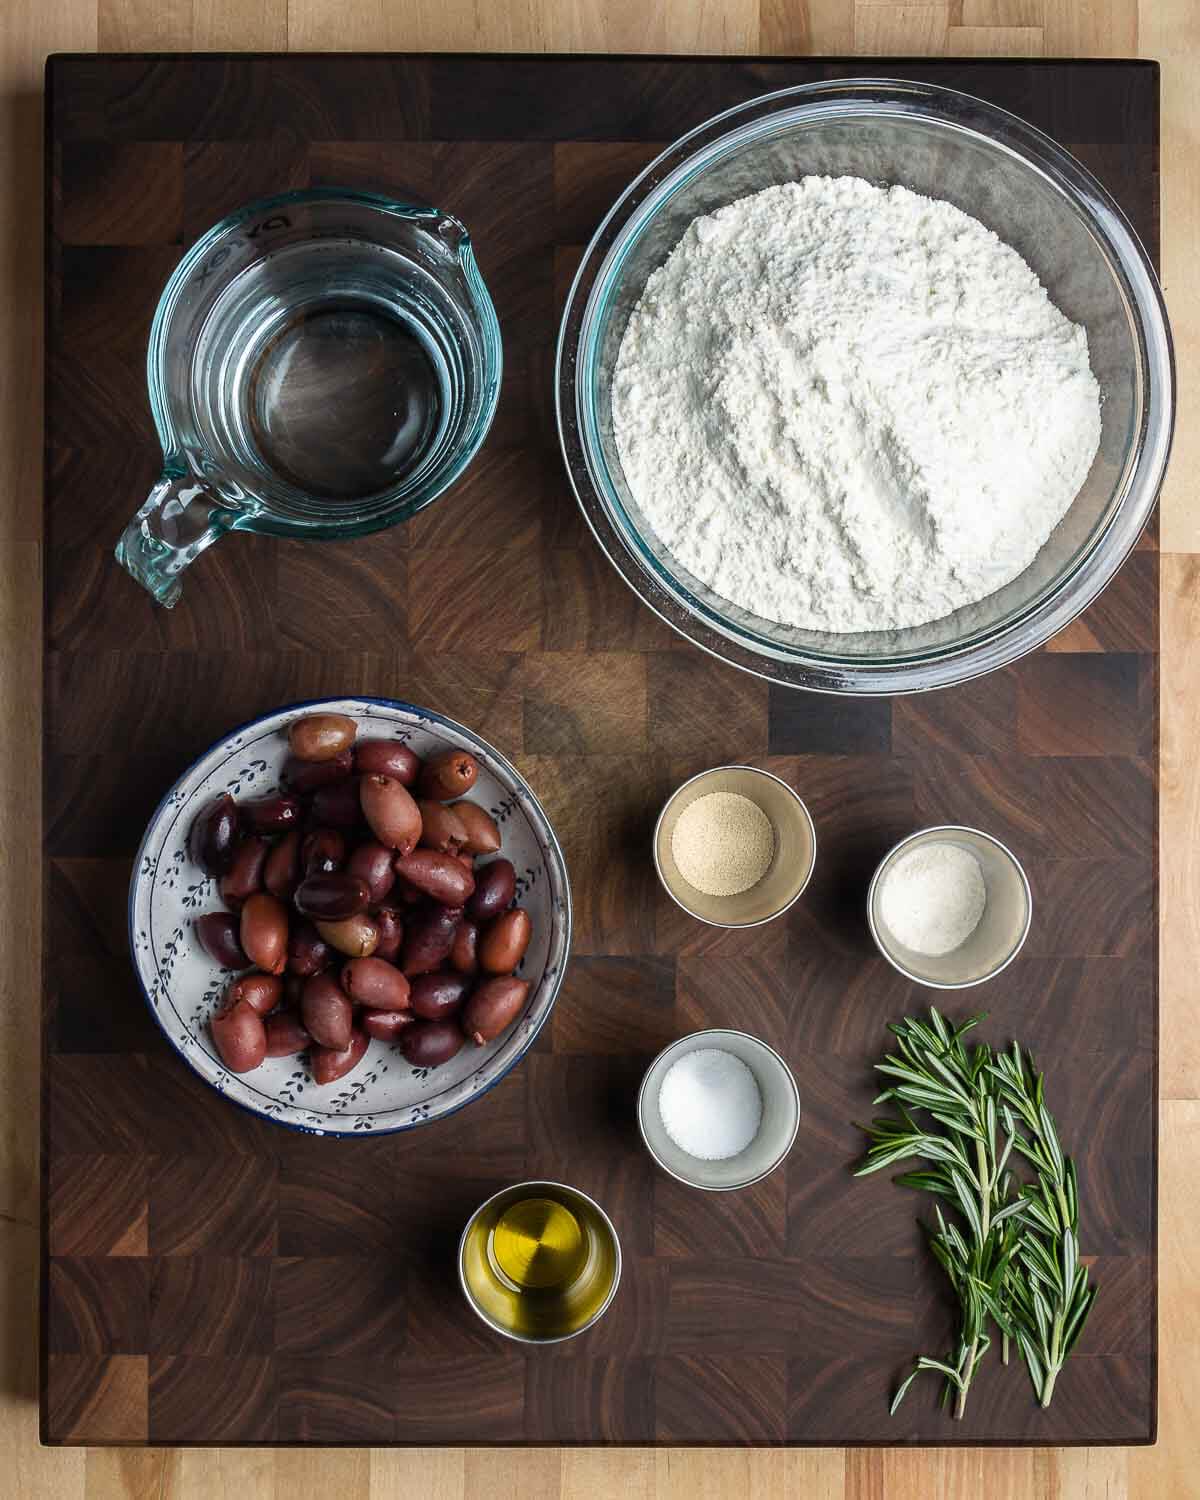 Ingredients shown: water, bread flour, kalamata olives, yeast, diastatic malt powder, salt, olive oil, and rosemary.